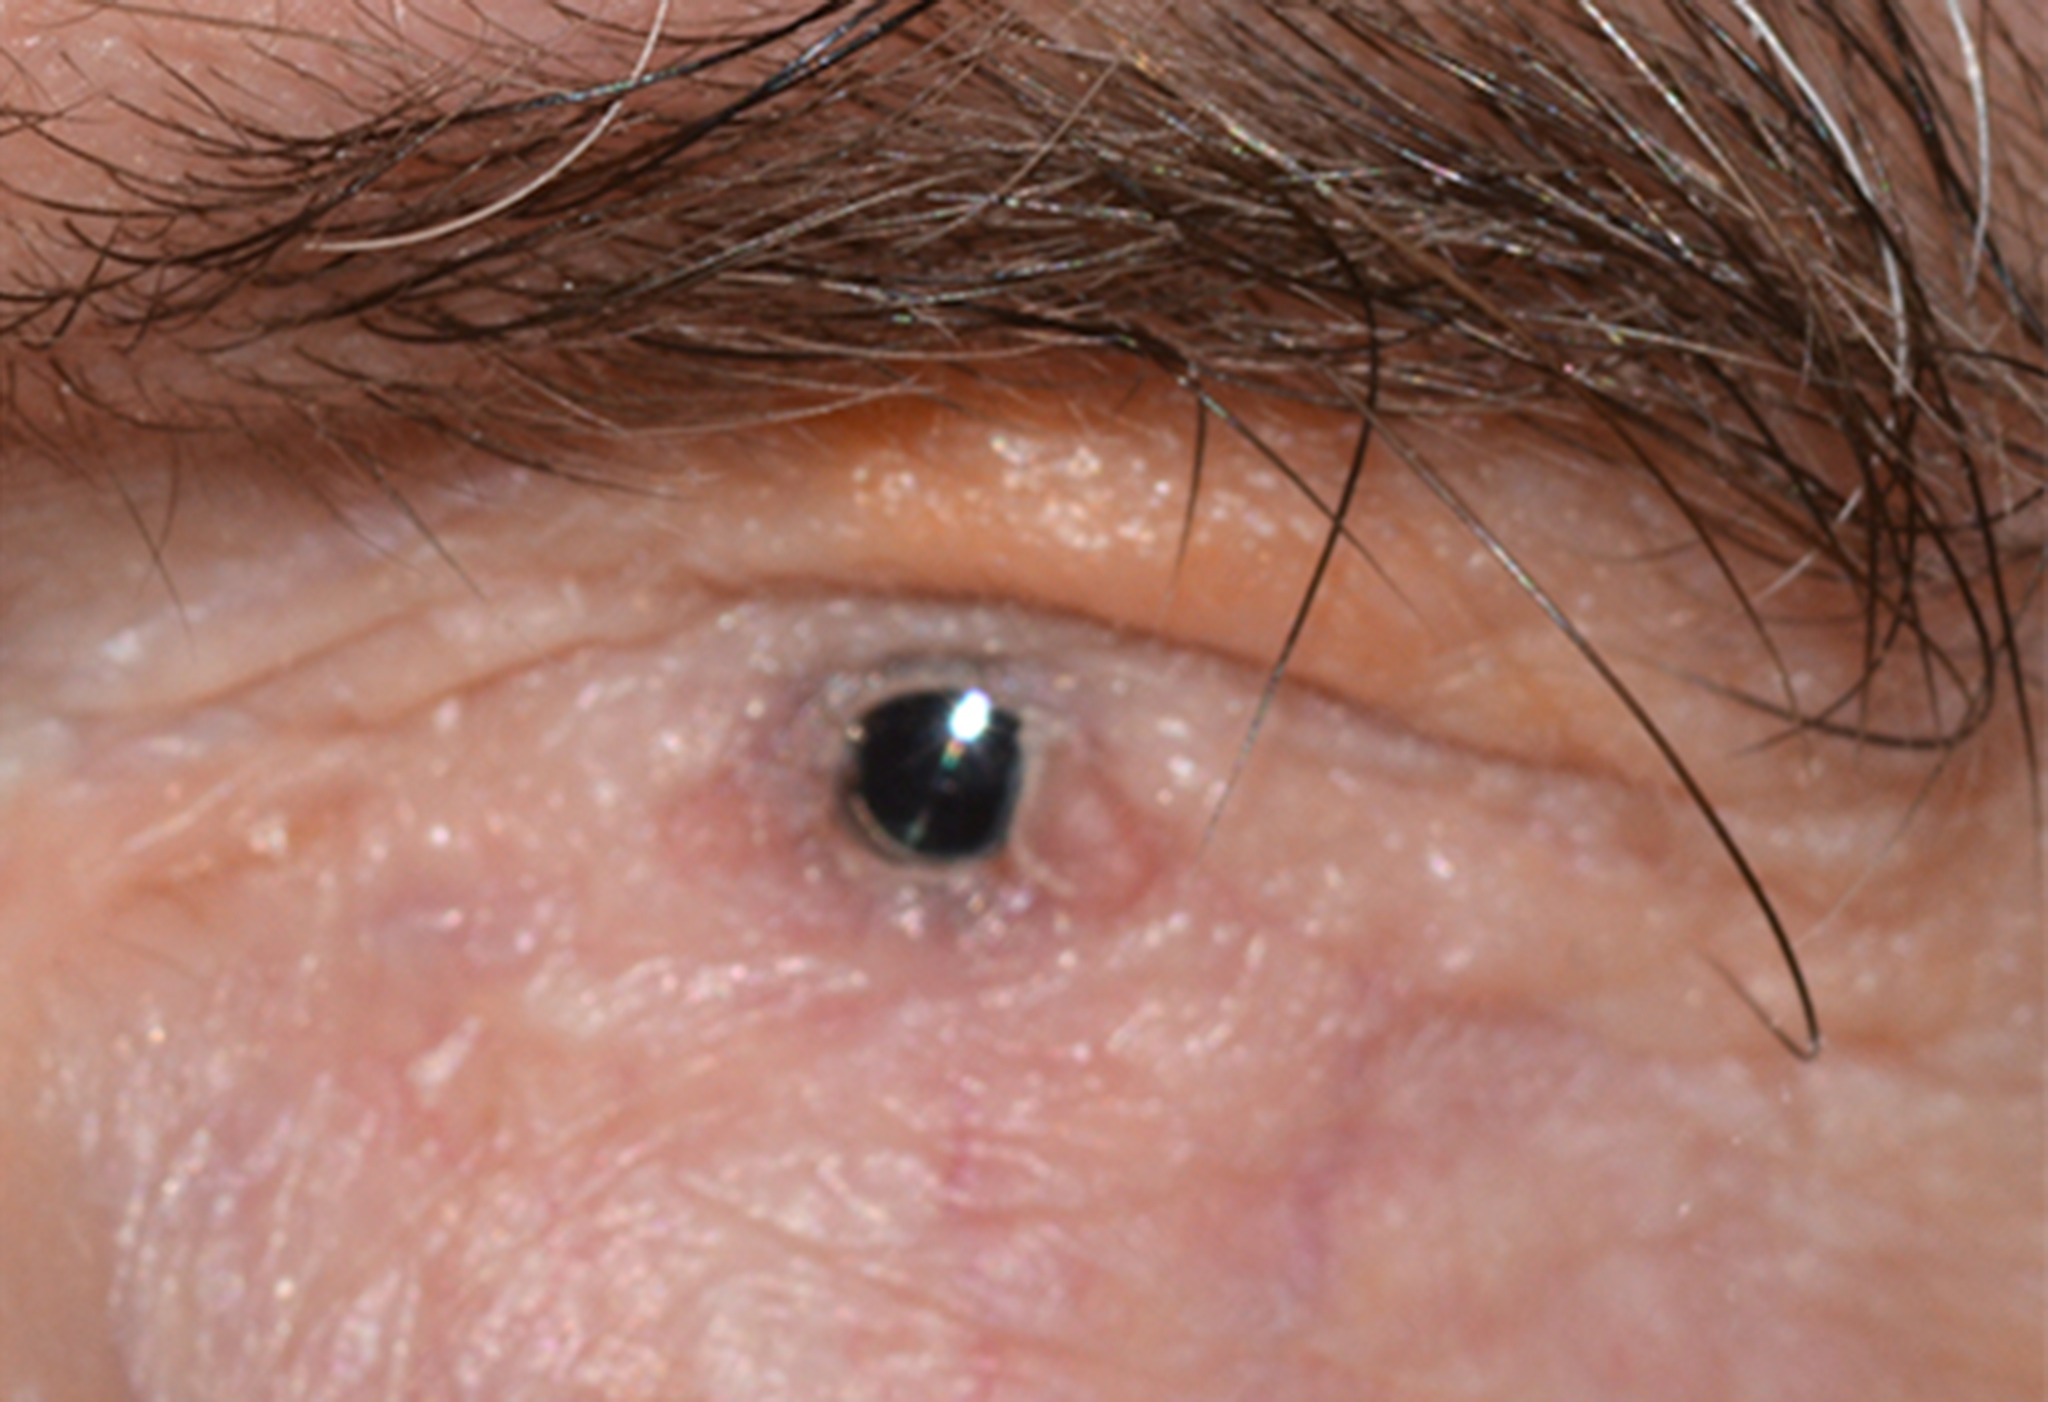 Boston Type II KPro for severe ocular cicatricial pemphigoid